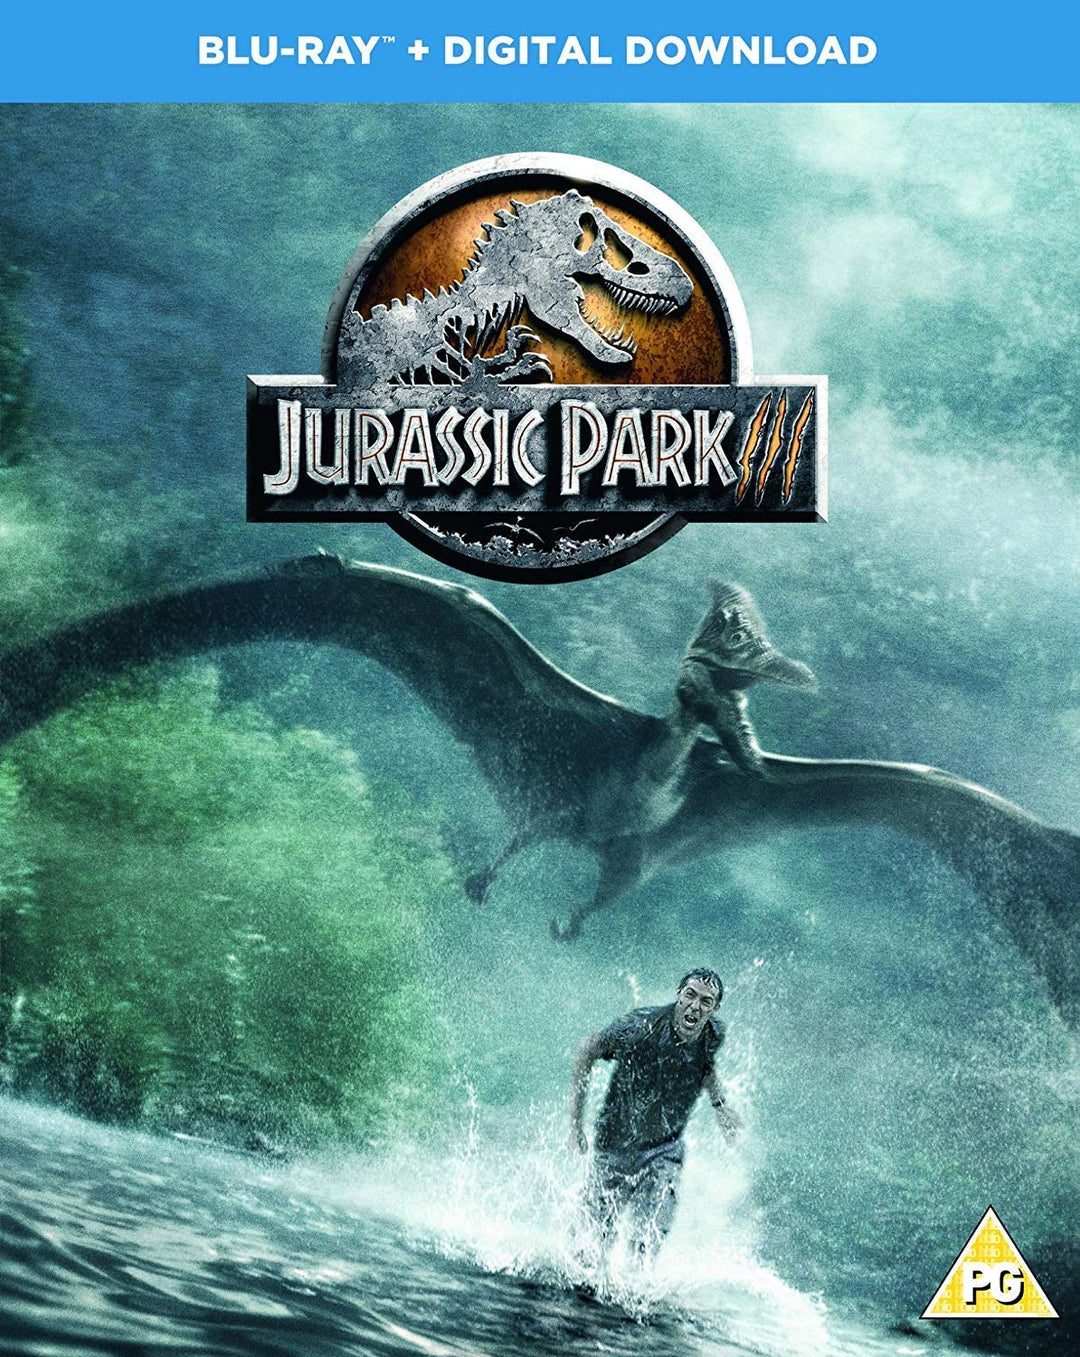 Jurassic Park III (BD) [2018] [Region Free] – Abenteuer [Blu-ray]